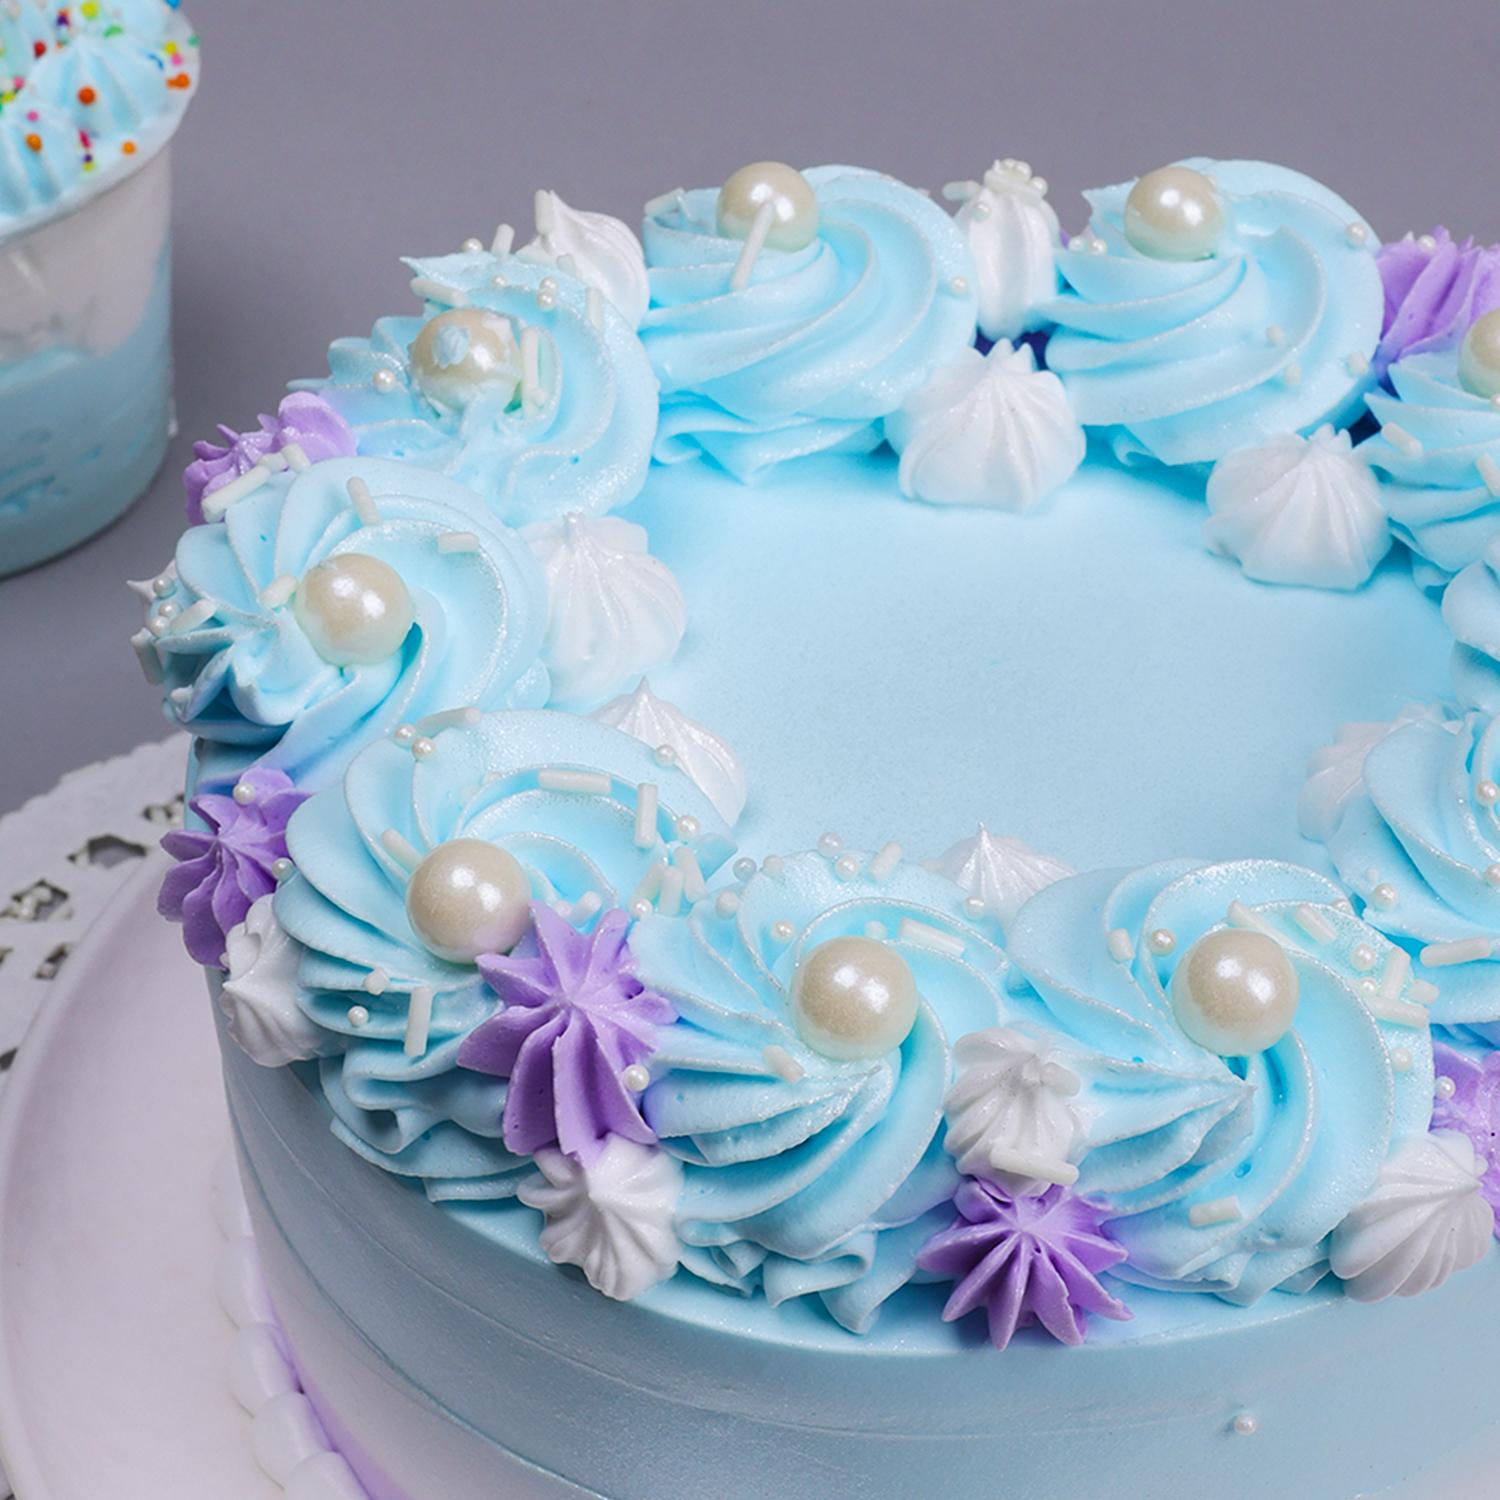 Blue Roses Designer Chocolate - Buy, Send & Order Online Delivery In India  - Cake2homes